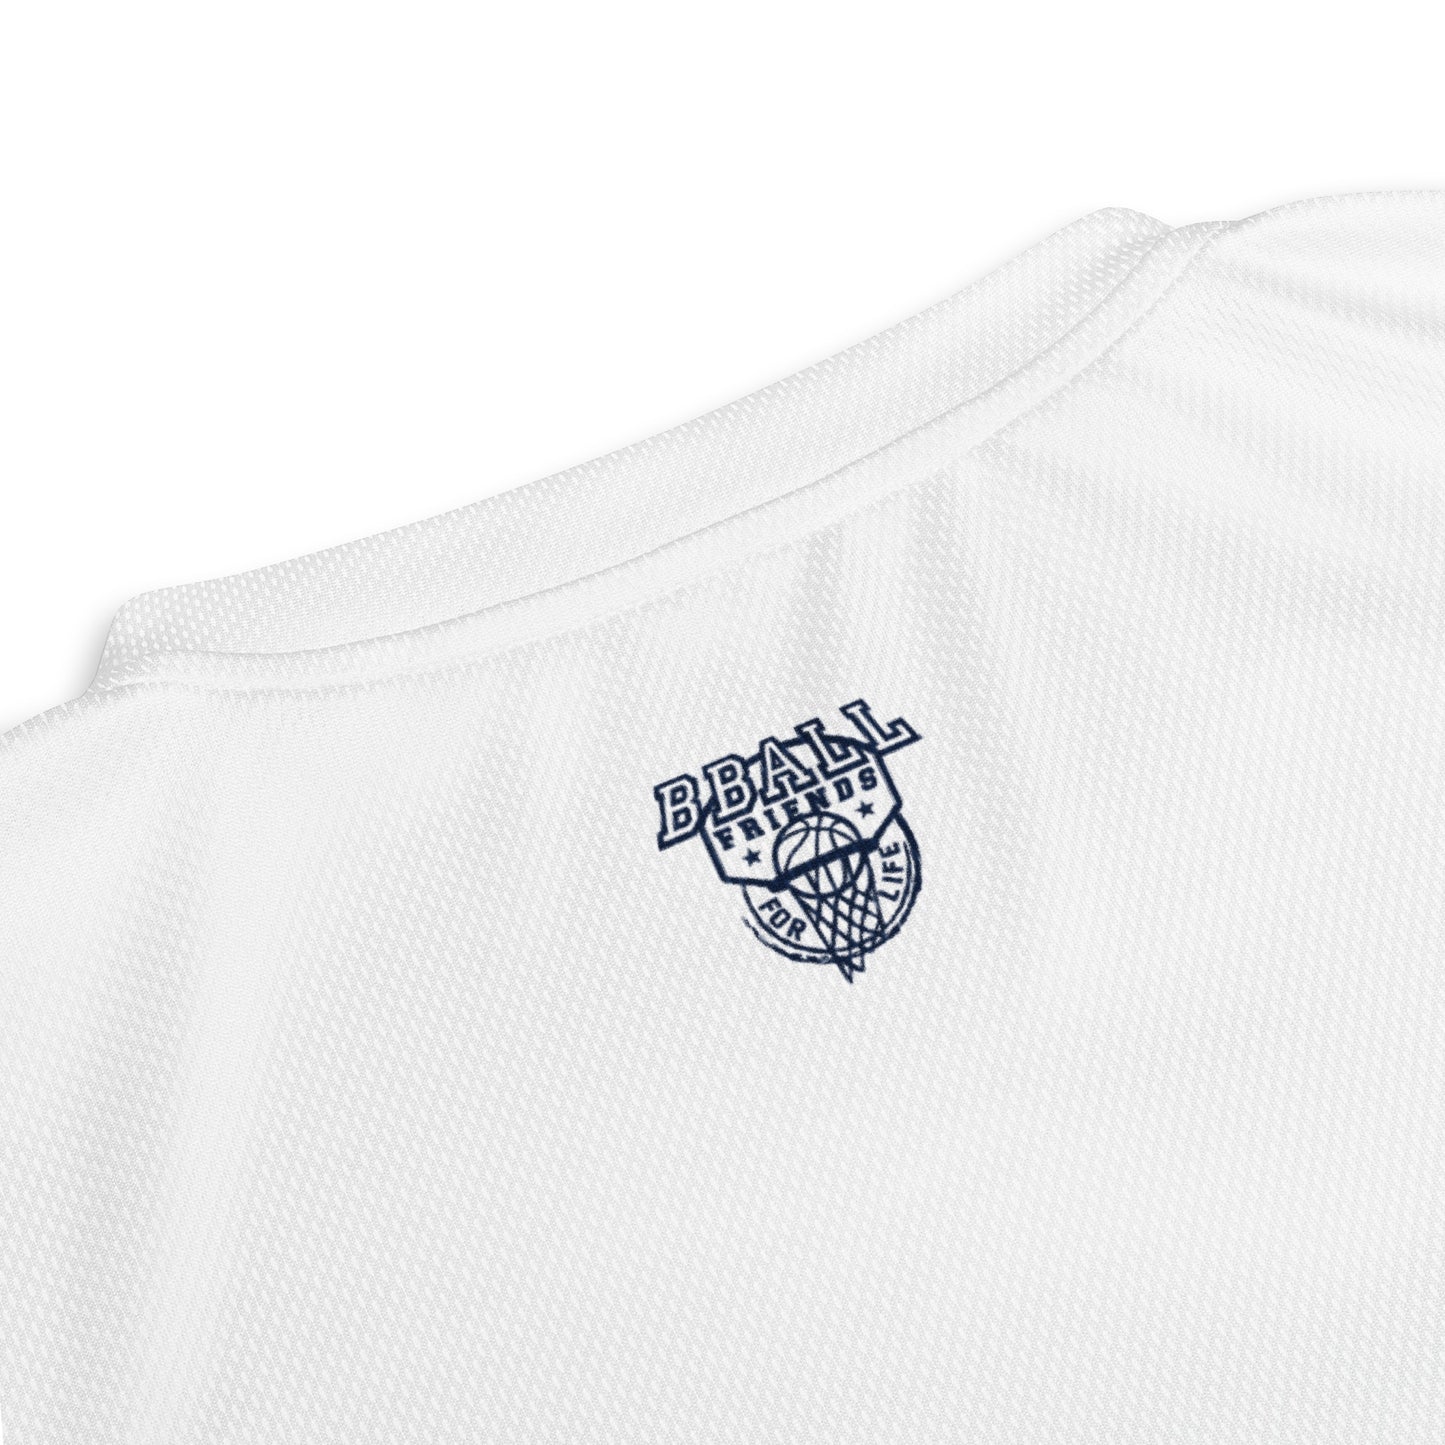 Warmup Shirt | Weiß | Holstein Hoppers